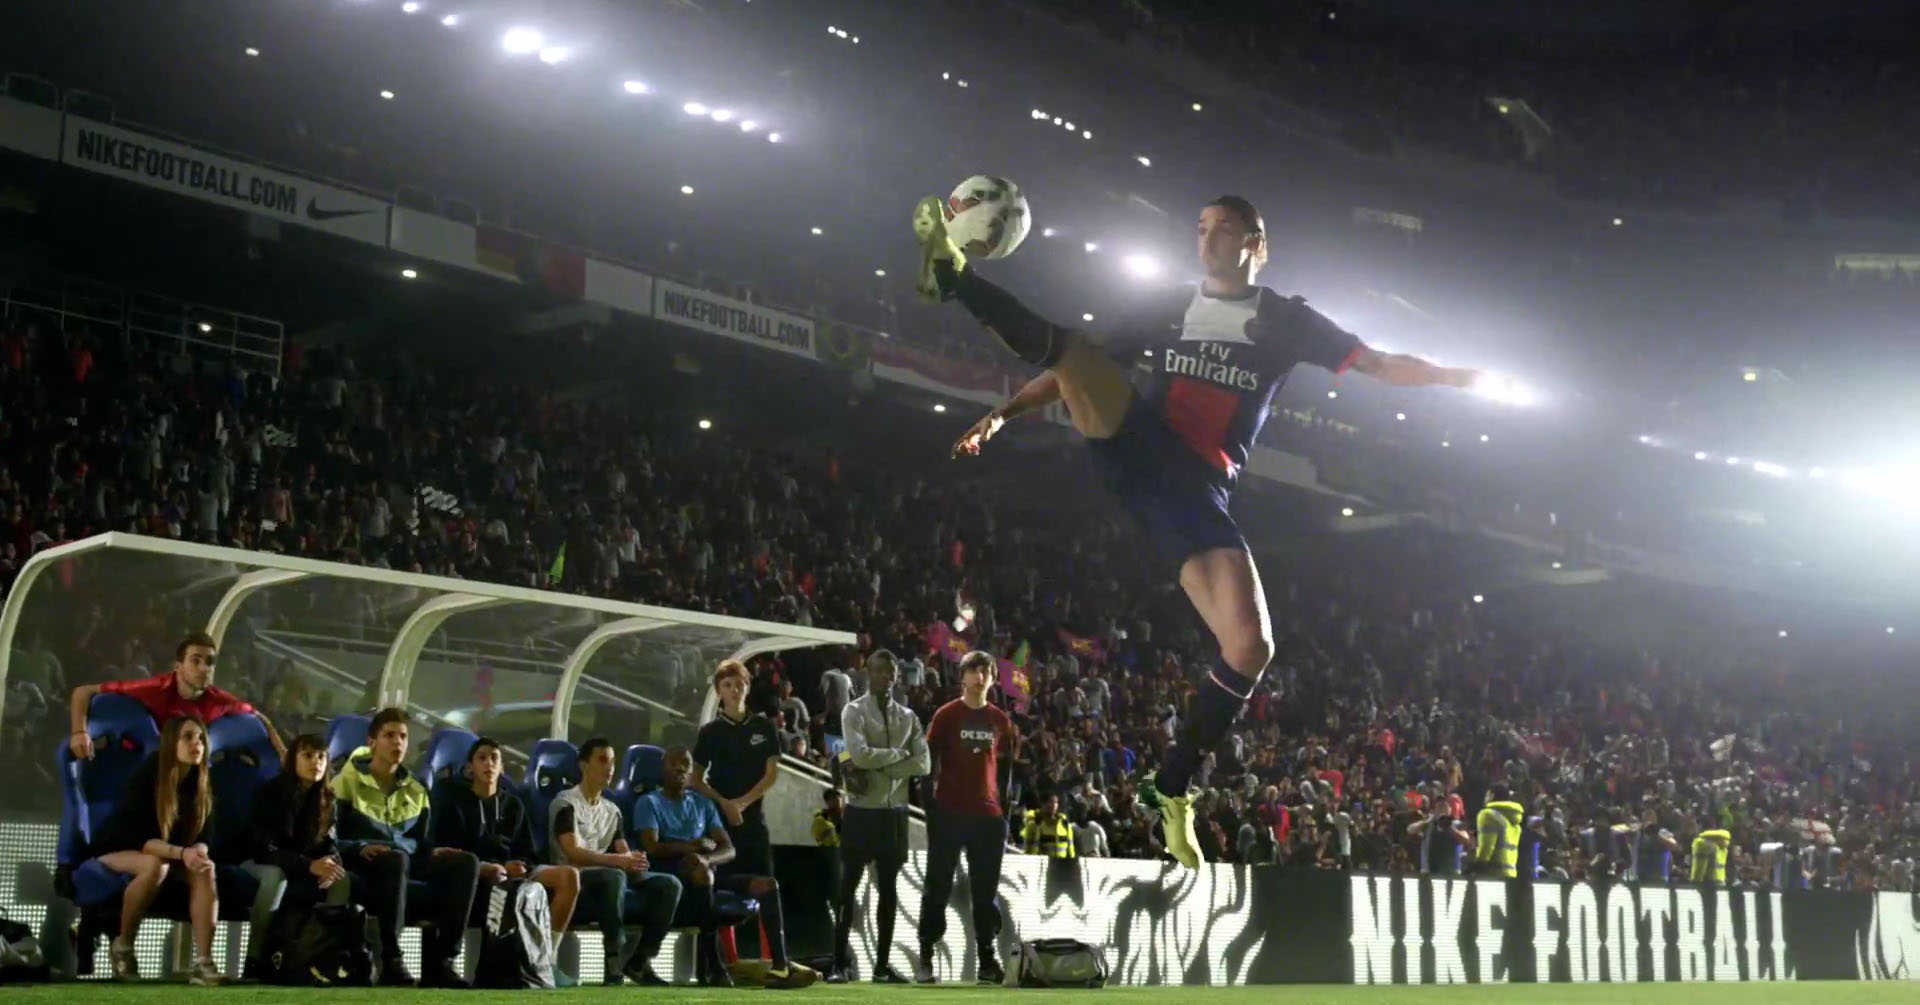 Zlatan Ibrahimovic ball control in the new Nike video ad